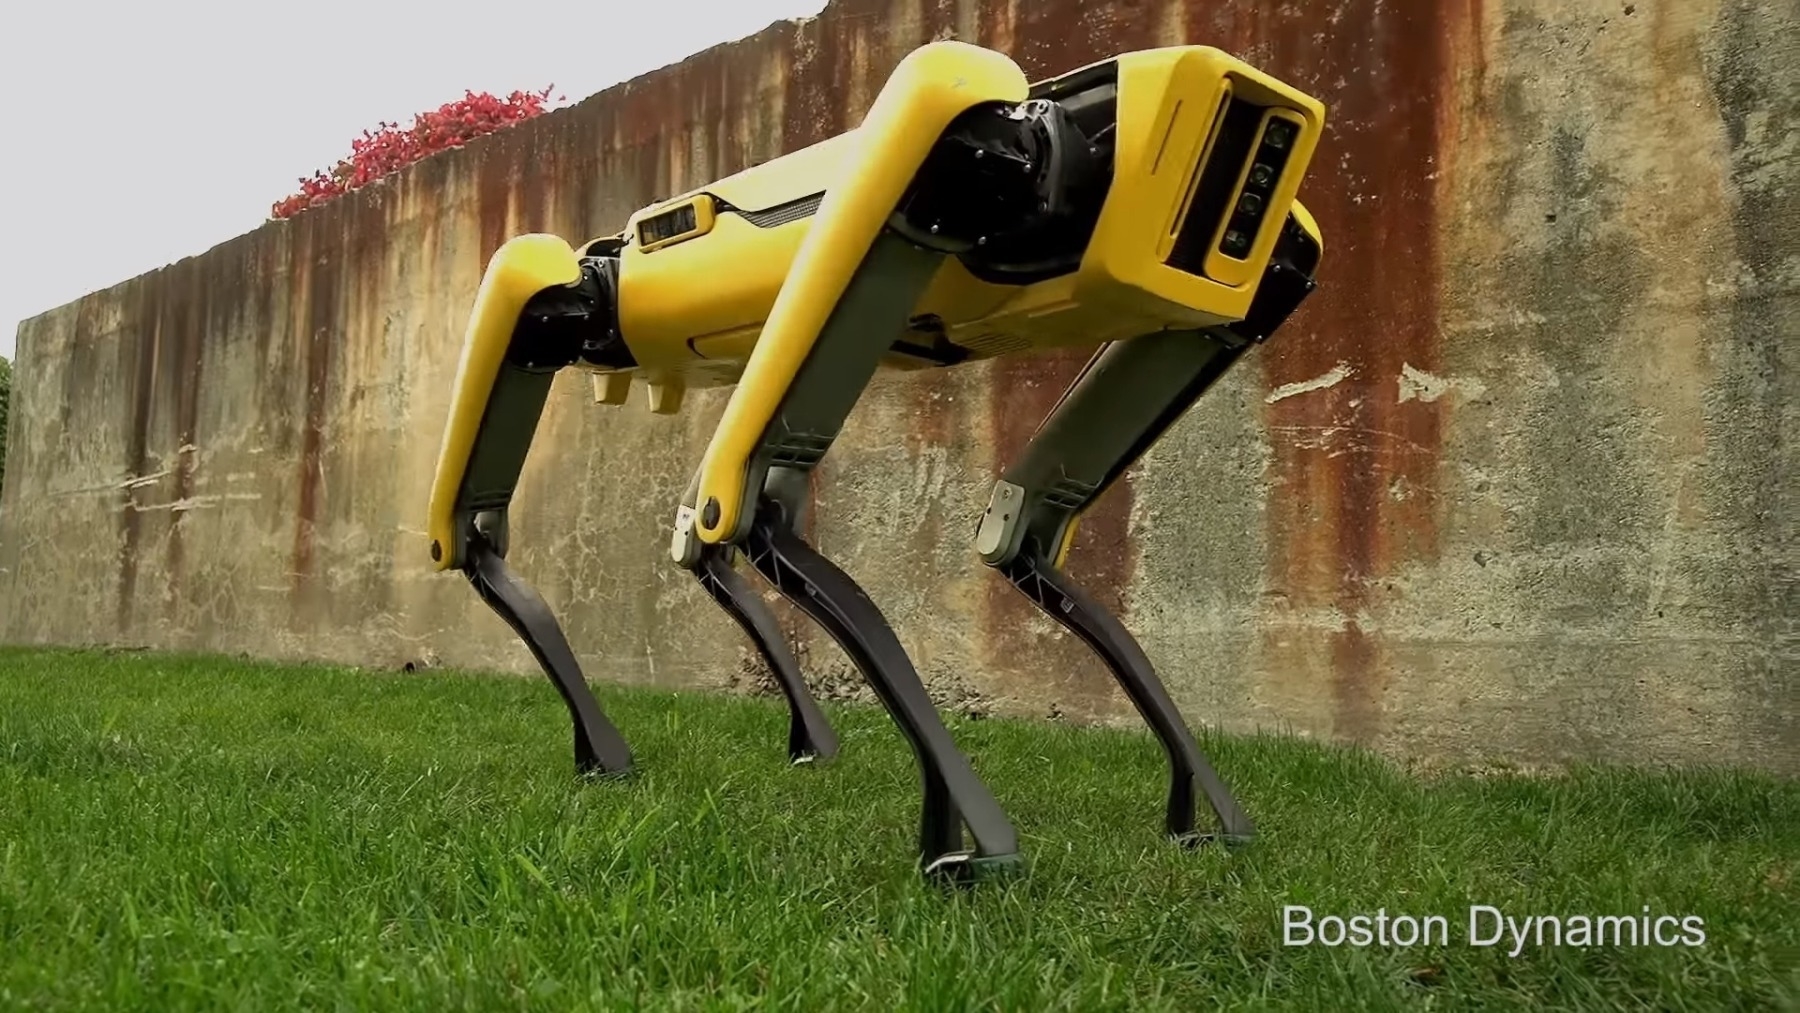 Boston Dynamics 'new' SpotMini robot looks ready for a walk | DeviceDaily.com